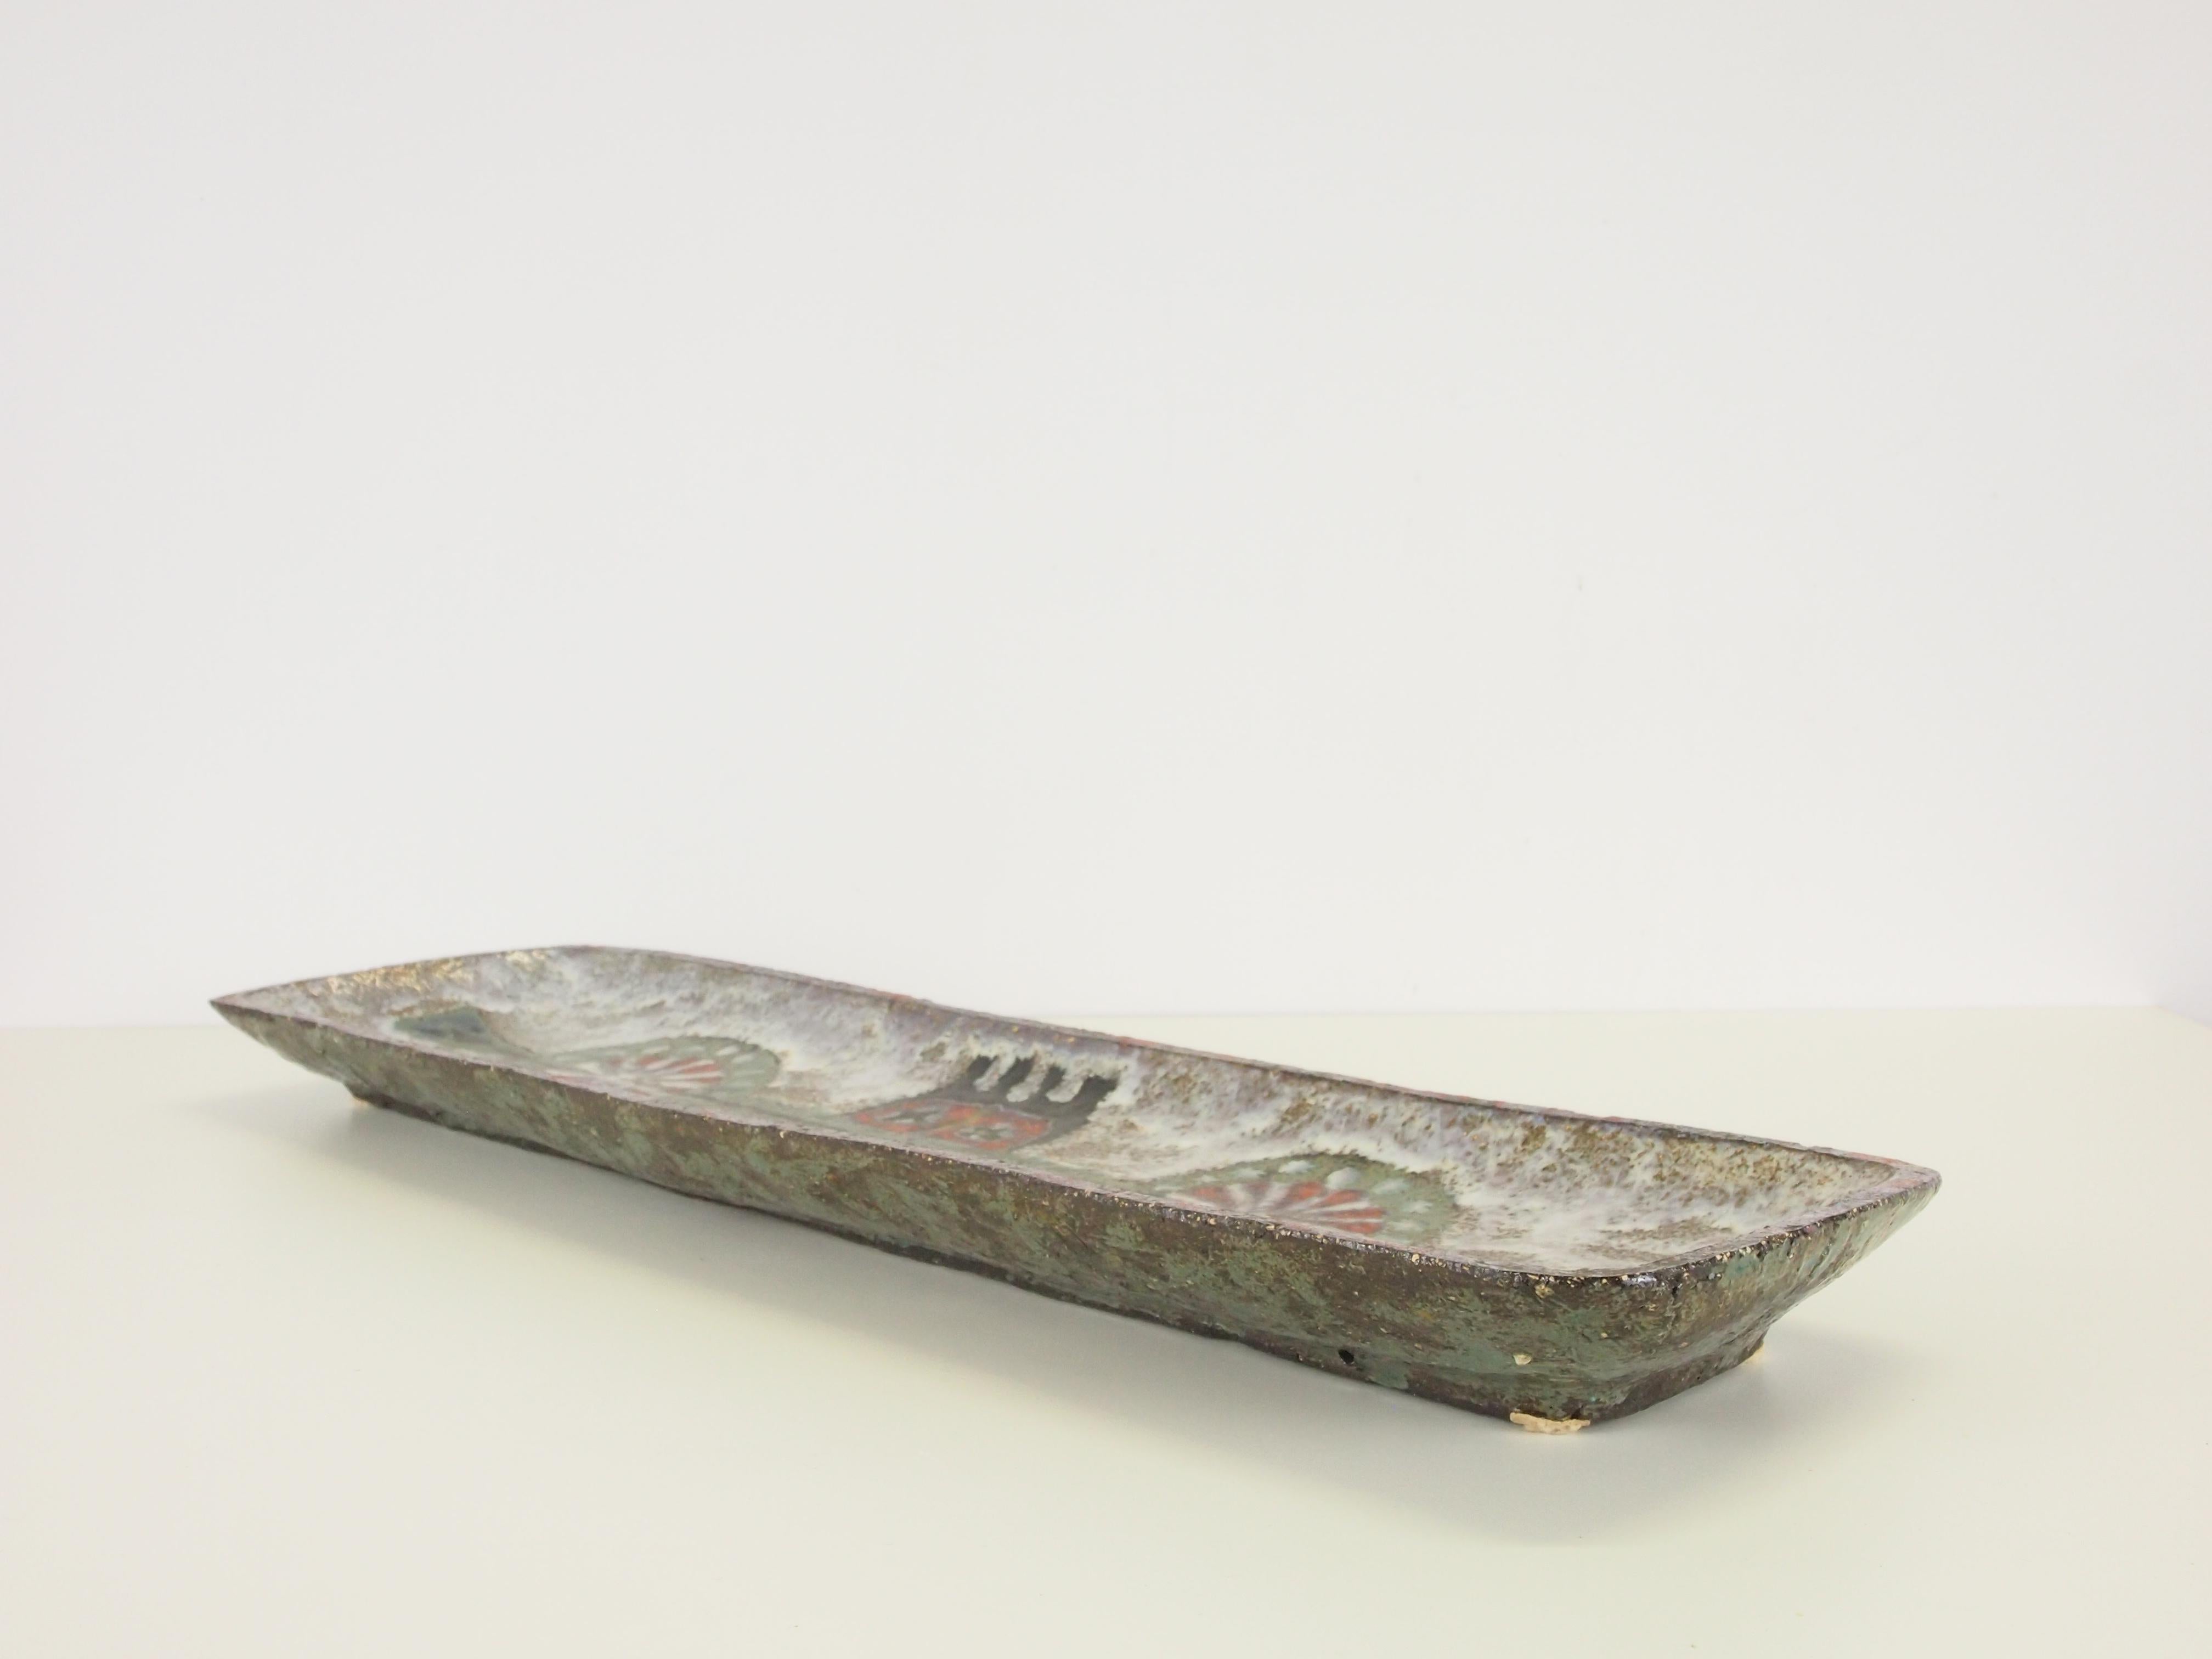 Midcentury Brutalist Belgium Studio Art Large Ceramic Scale by Jan Nolf For Sale 3